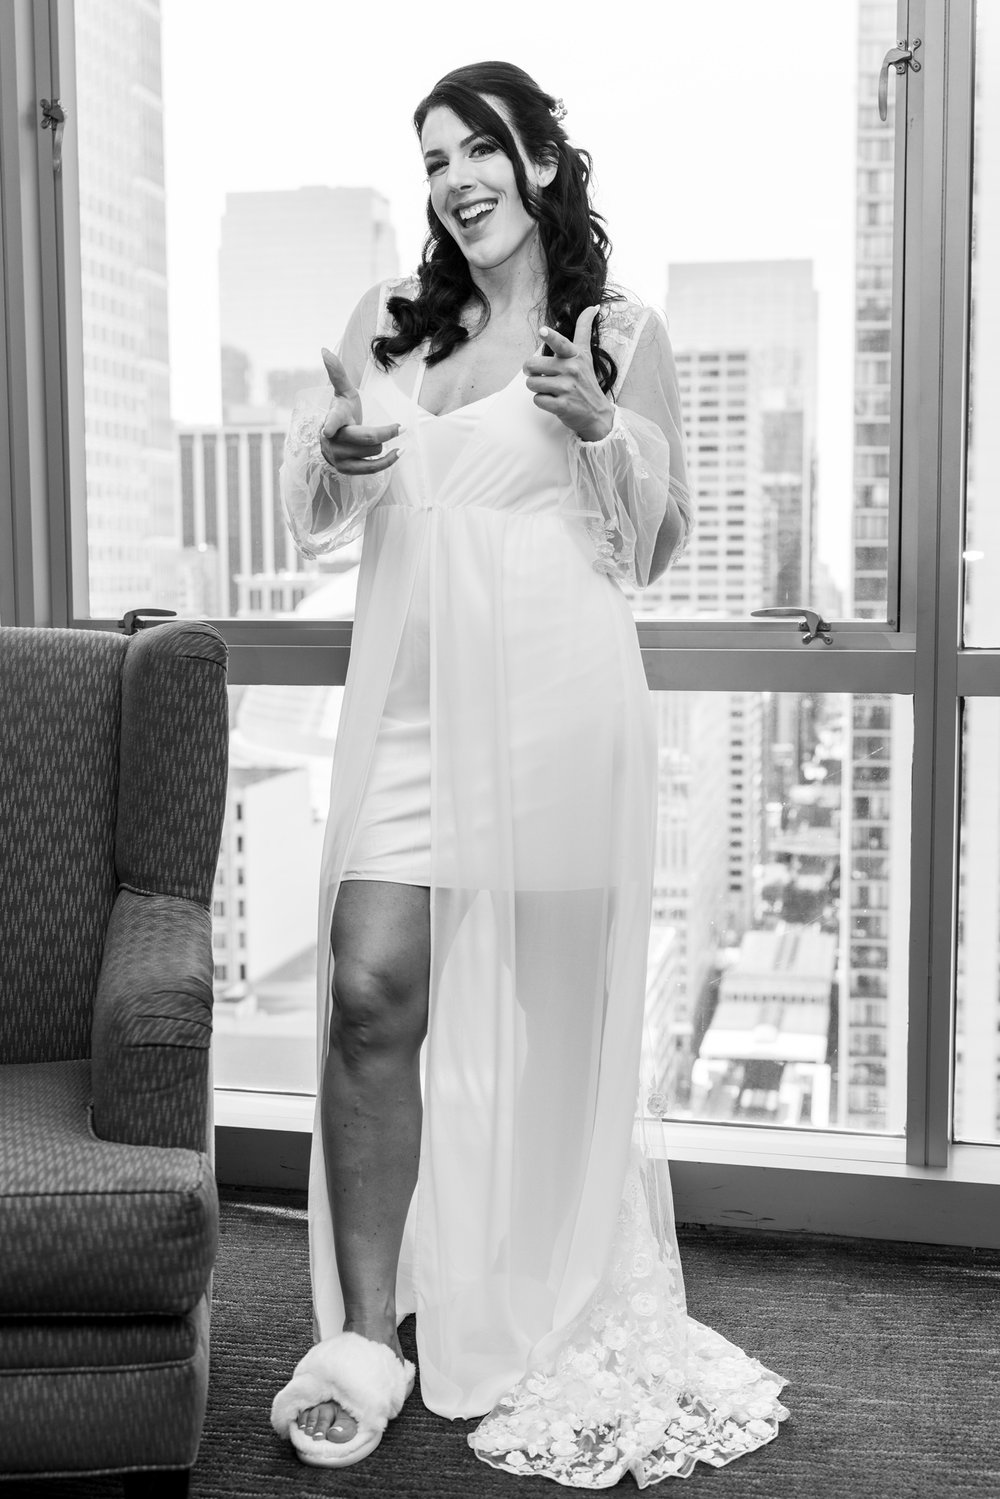 Alex Maldonado Photography | Chicago Wedding Photographer | -bride getting ready at the wit black and white fun portrait.jpg